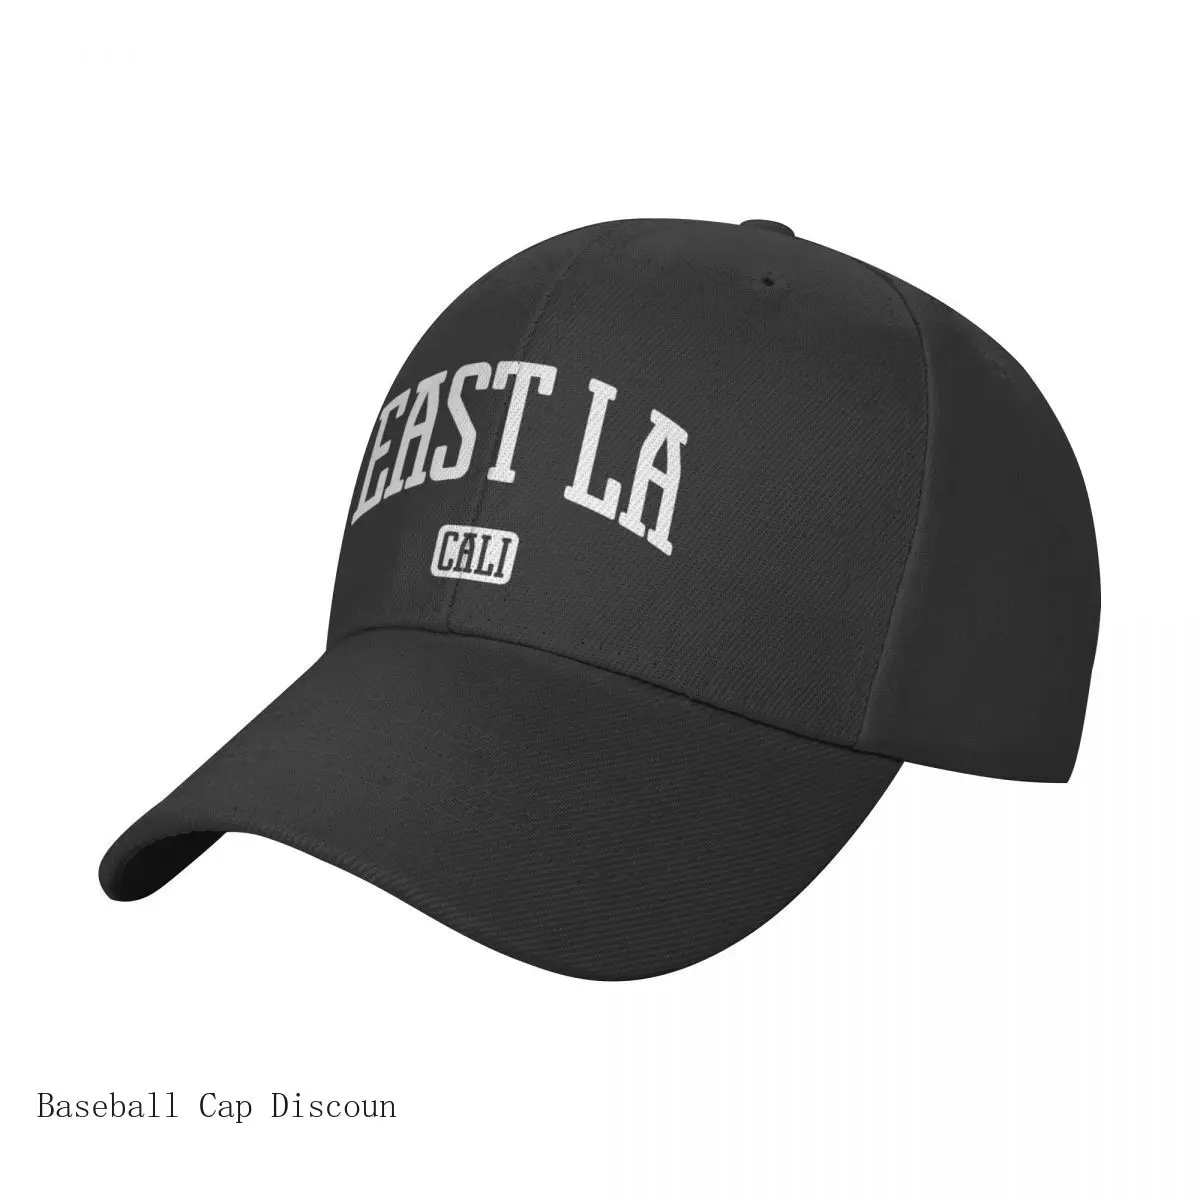 

East LA - Los Angeles Cap Baseball Cap baseball cap designer hat women's beach outlet Men's Best